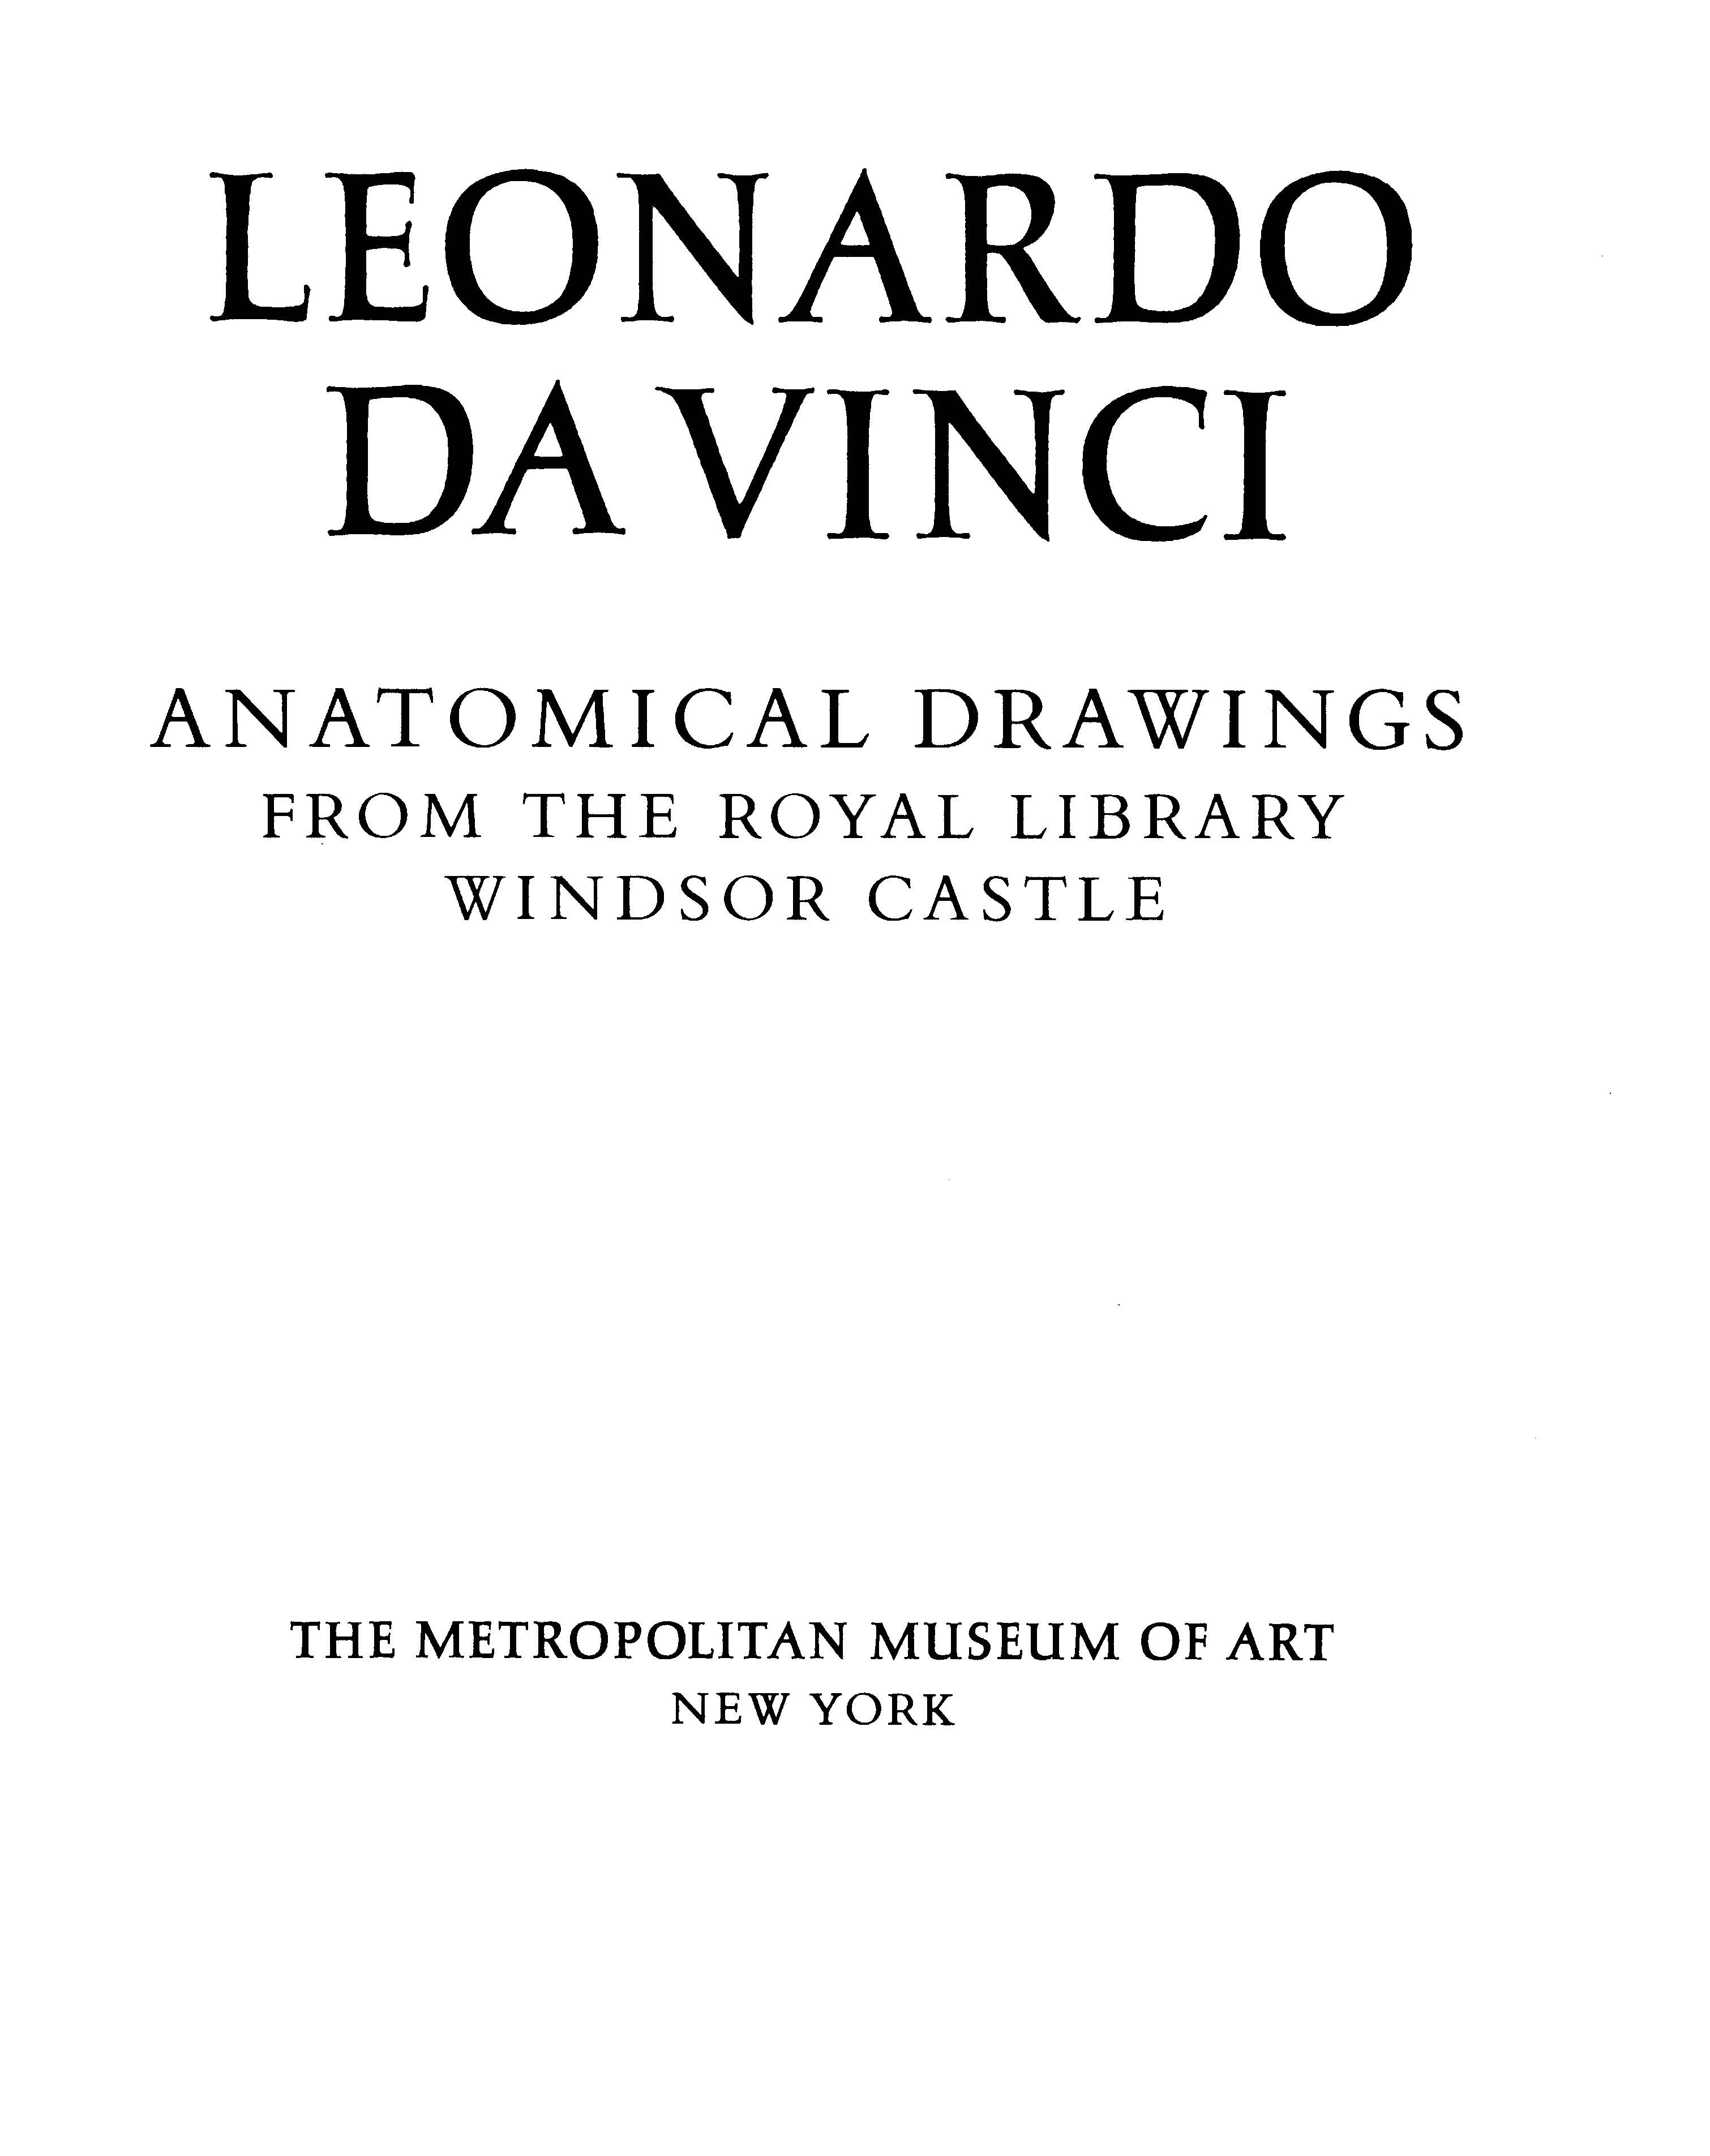 Leonardo da Vinci: Anatomical Drawings from the Royal Library, Windsor Castle